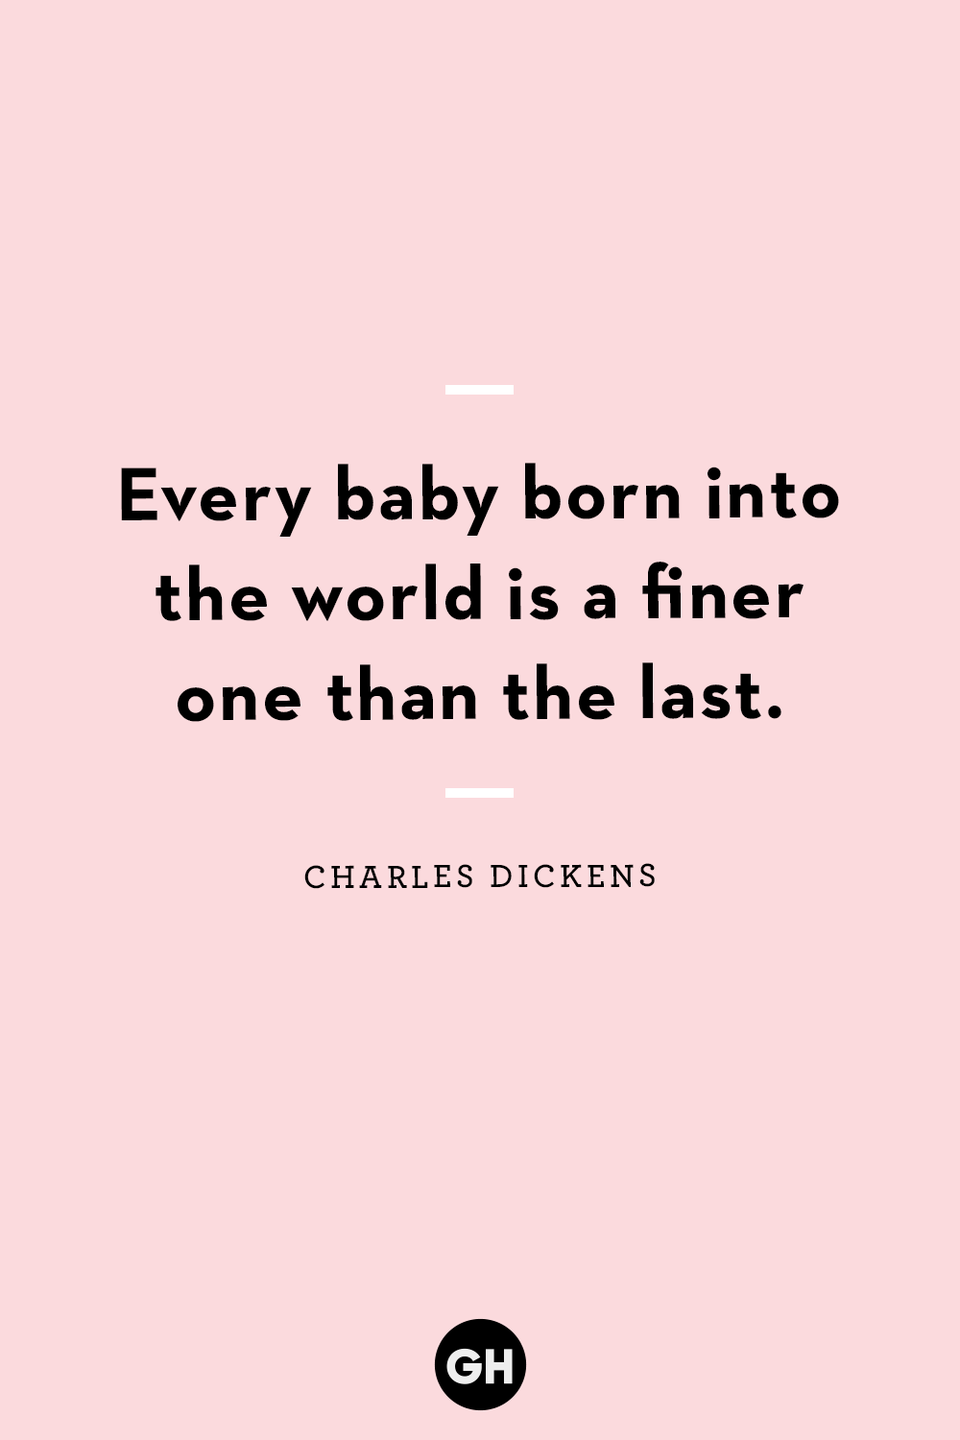 37) Charles Dickens